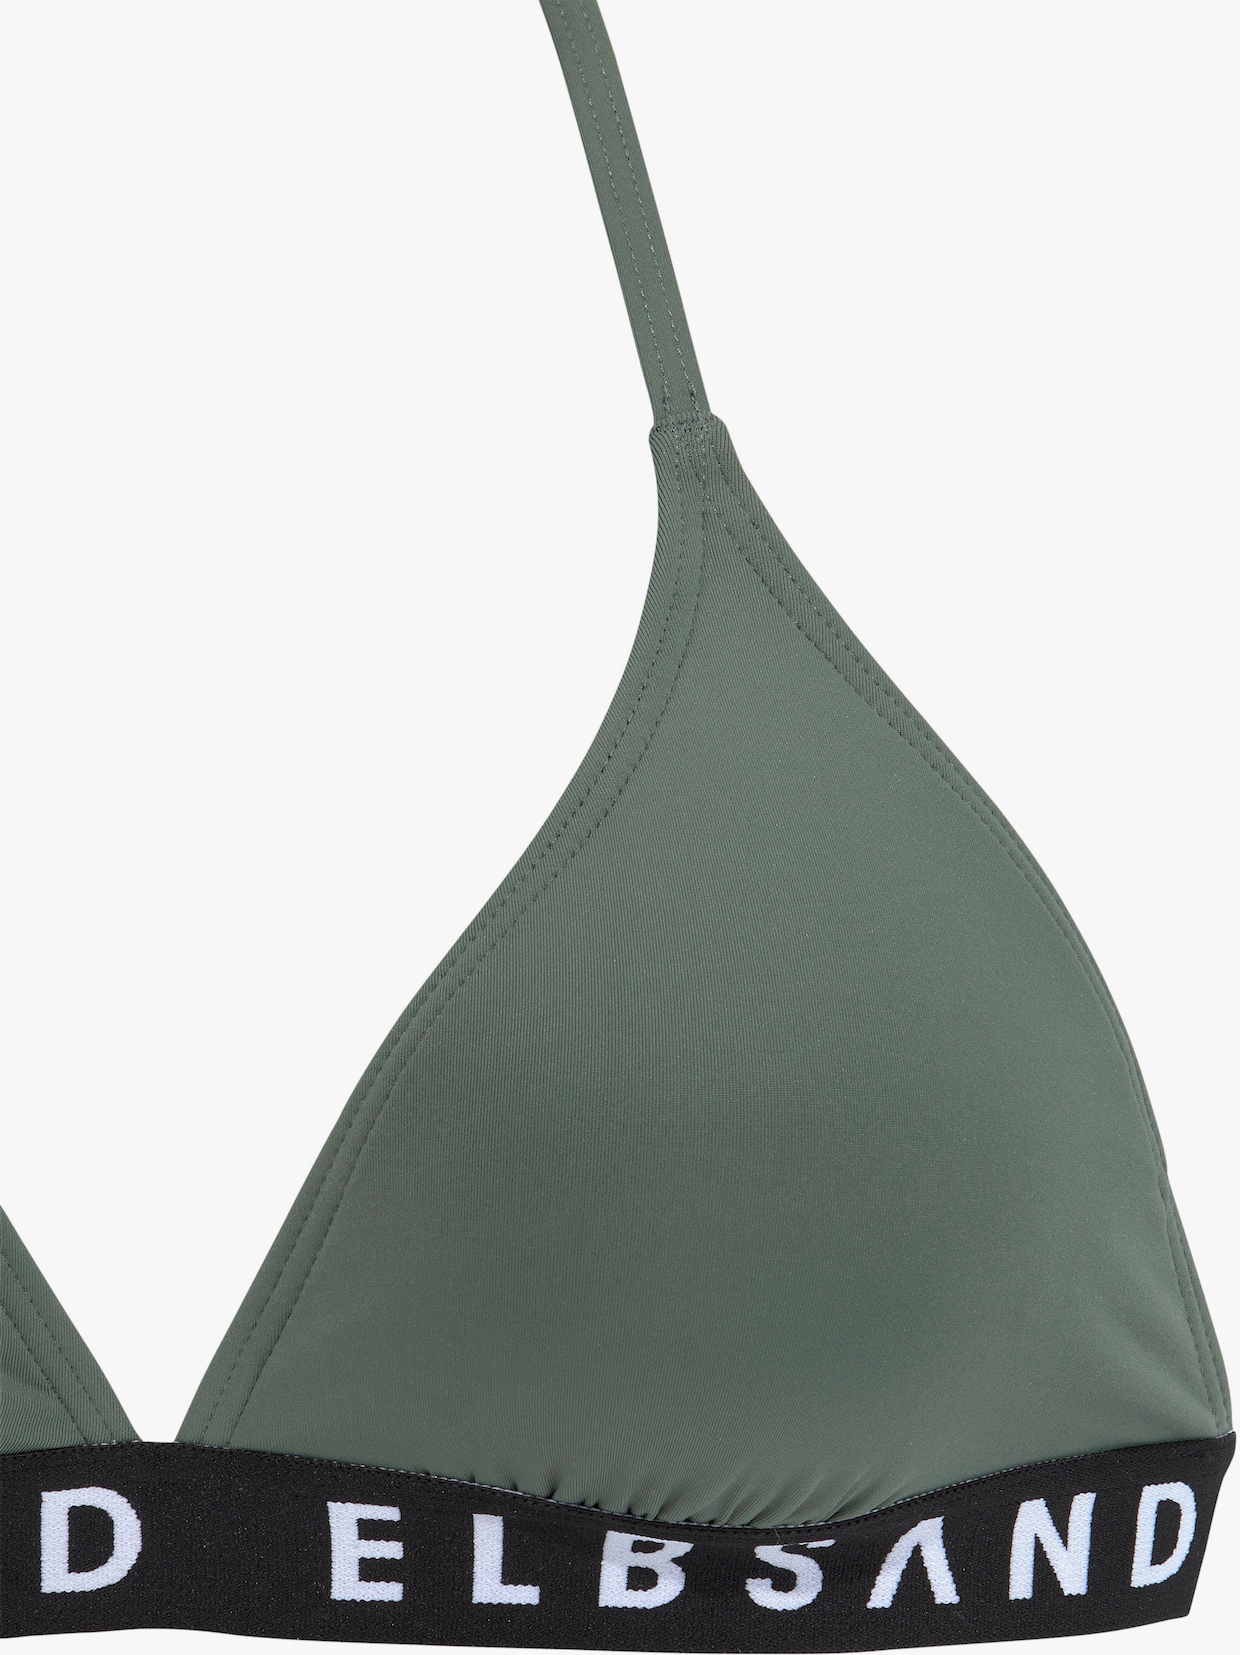 Elbsand Bikini triangle - vert olive